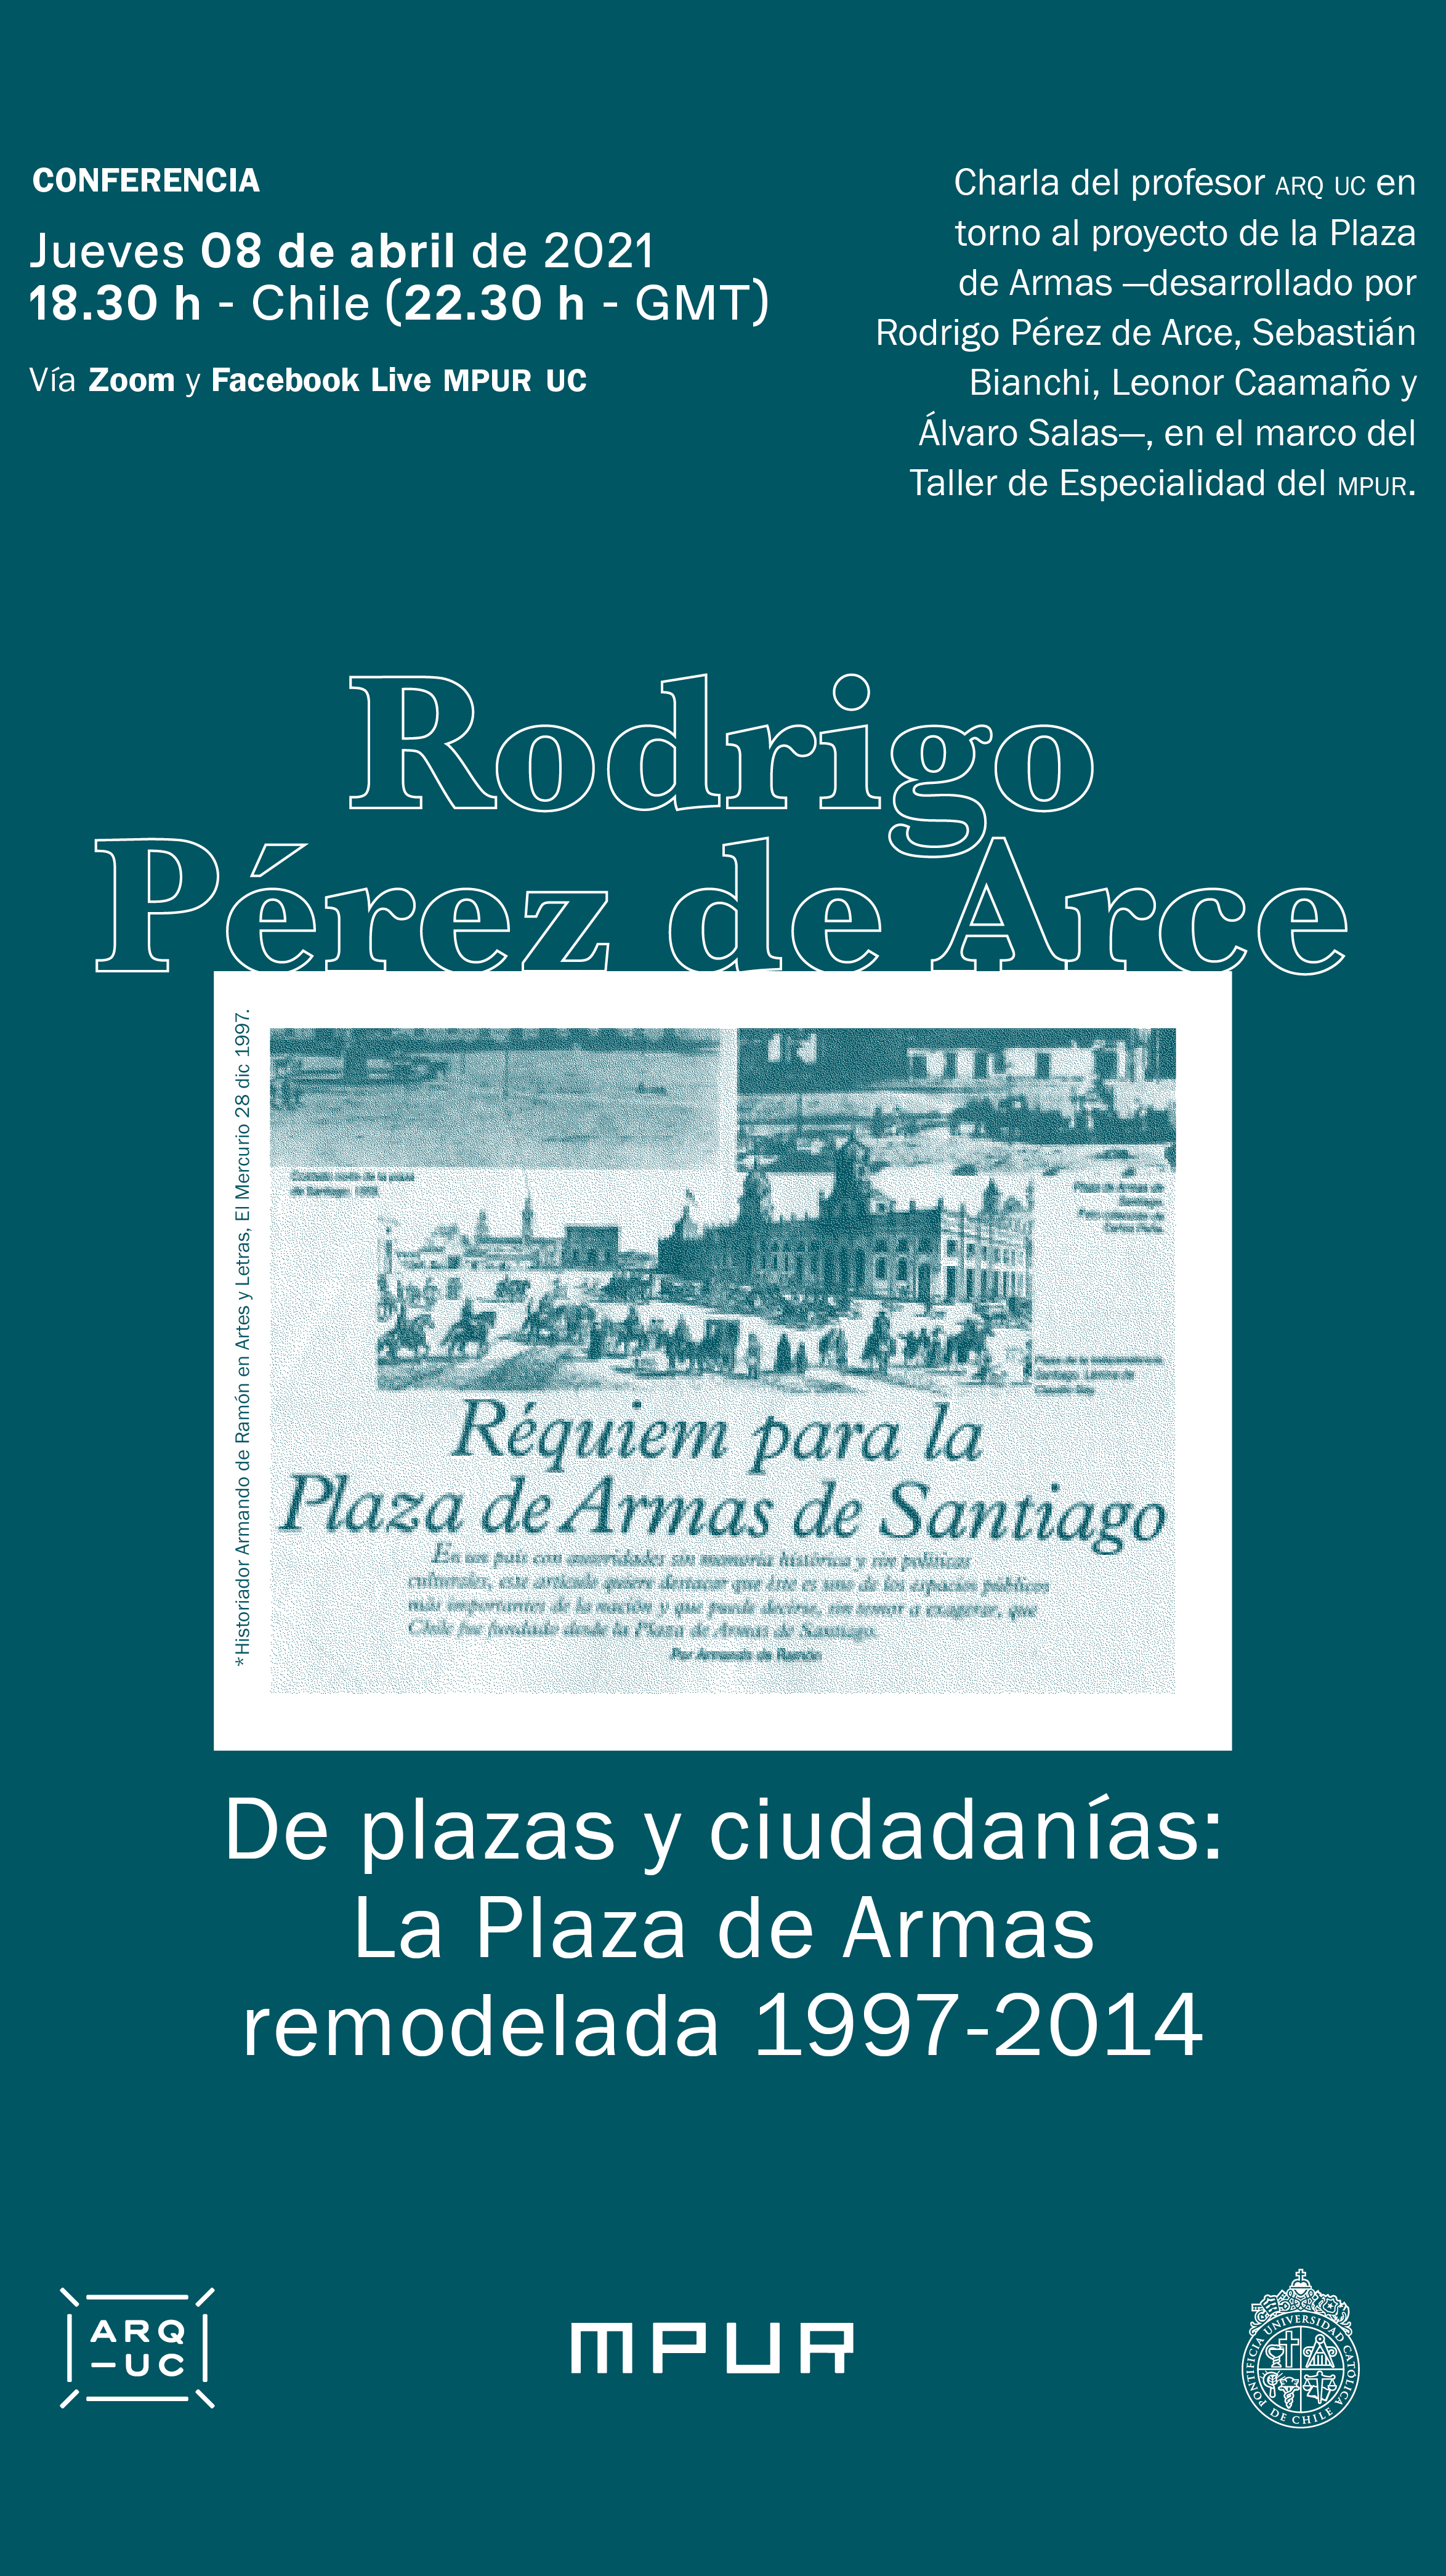 20210329_AFICHE_conferencia_Rodrigo_Pérez_de_Arce.png